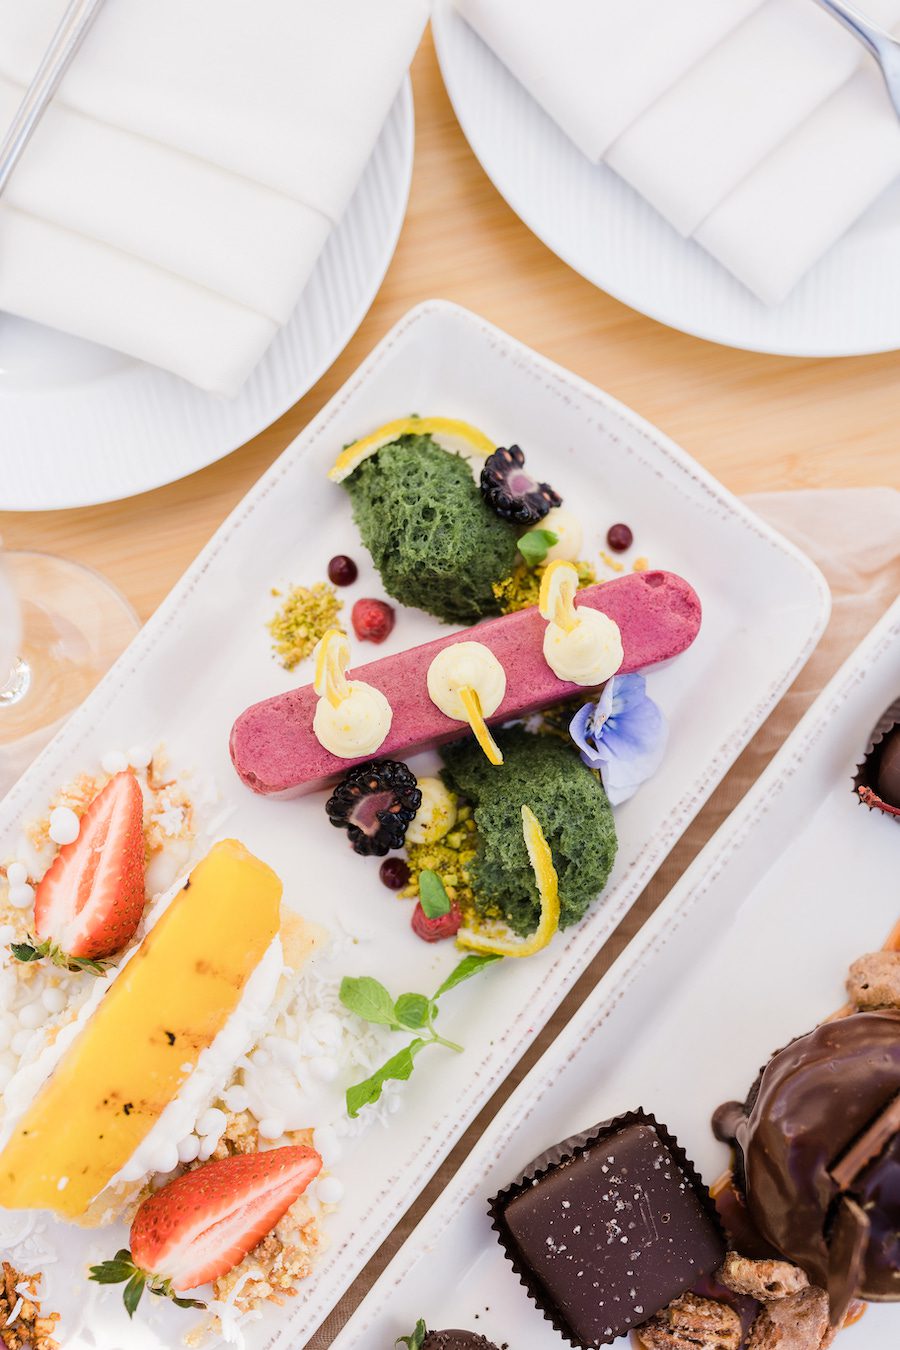 dessert details at this Magical Sedona Arizona picnic proposal set up